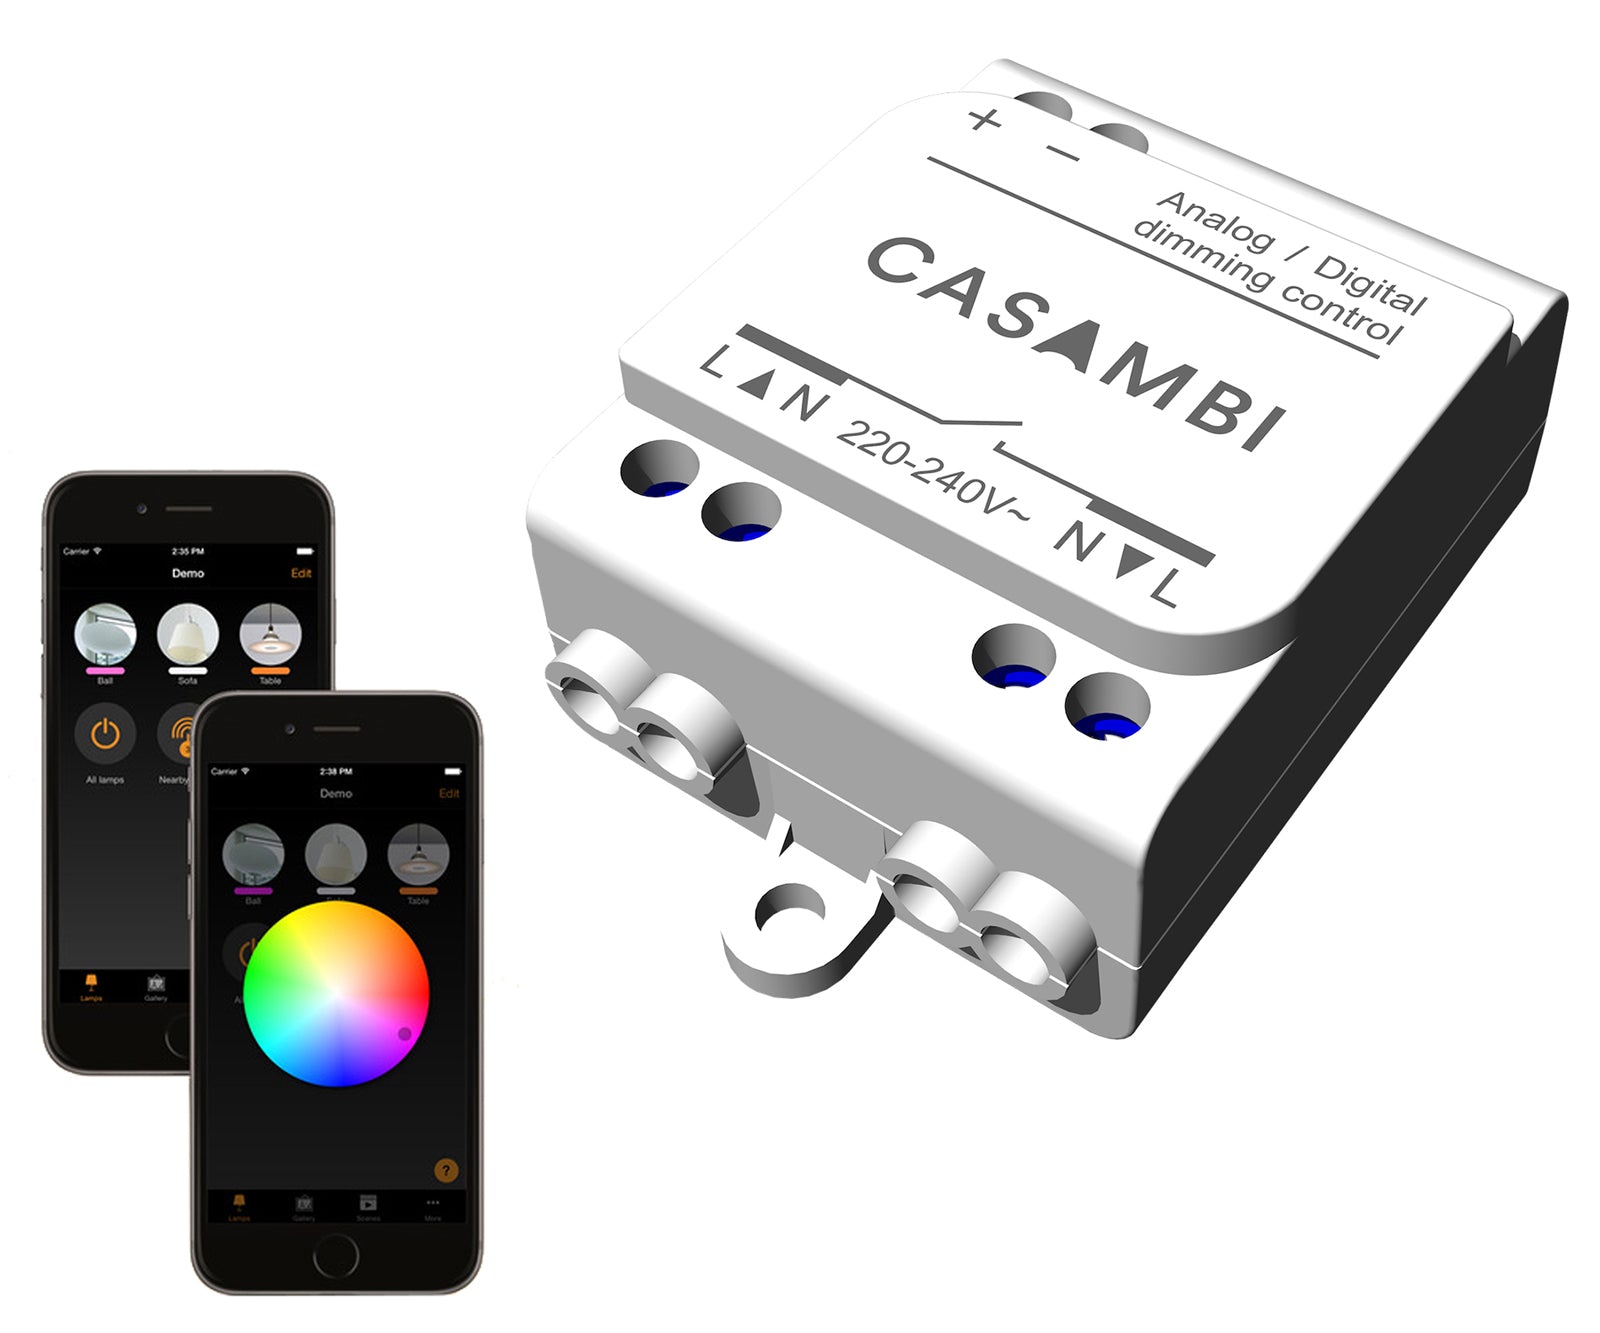 Casambi bluetooth controller CBU-ASD DALI 0-10V 1-10V dimmer LED SMART HOME